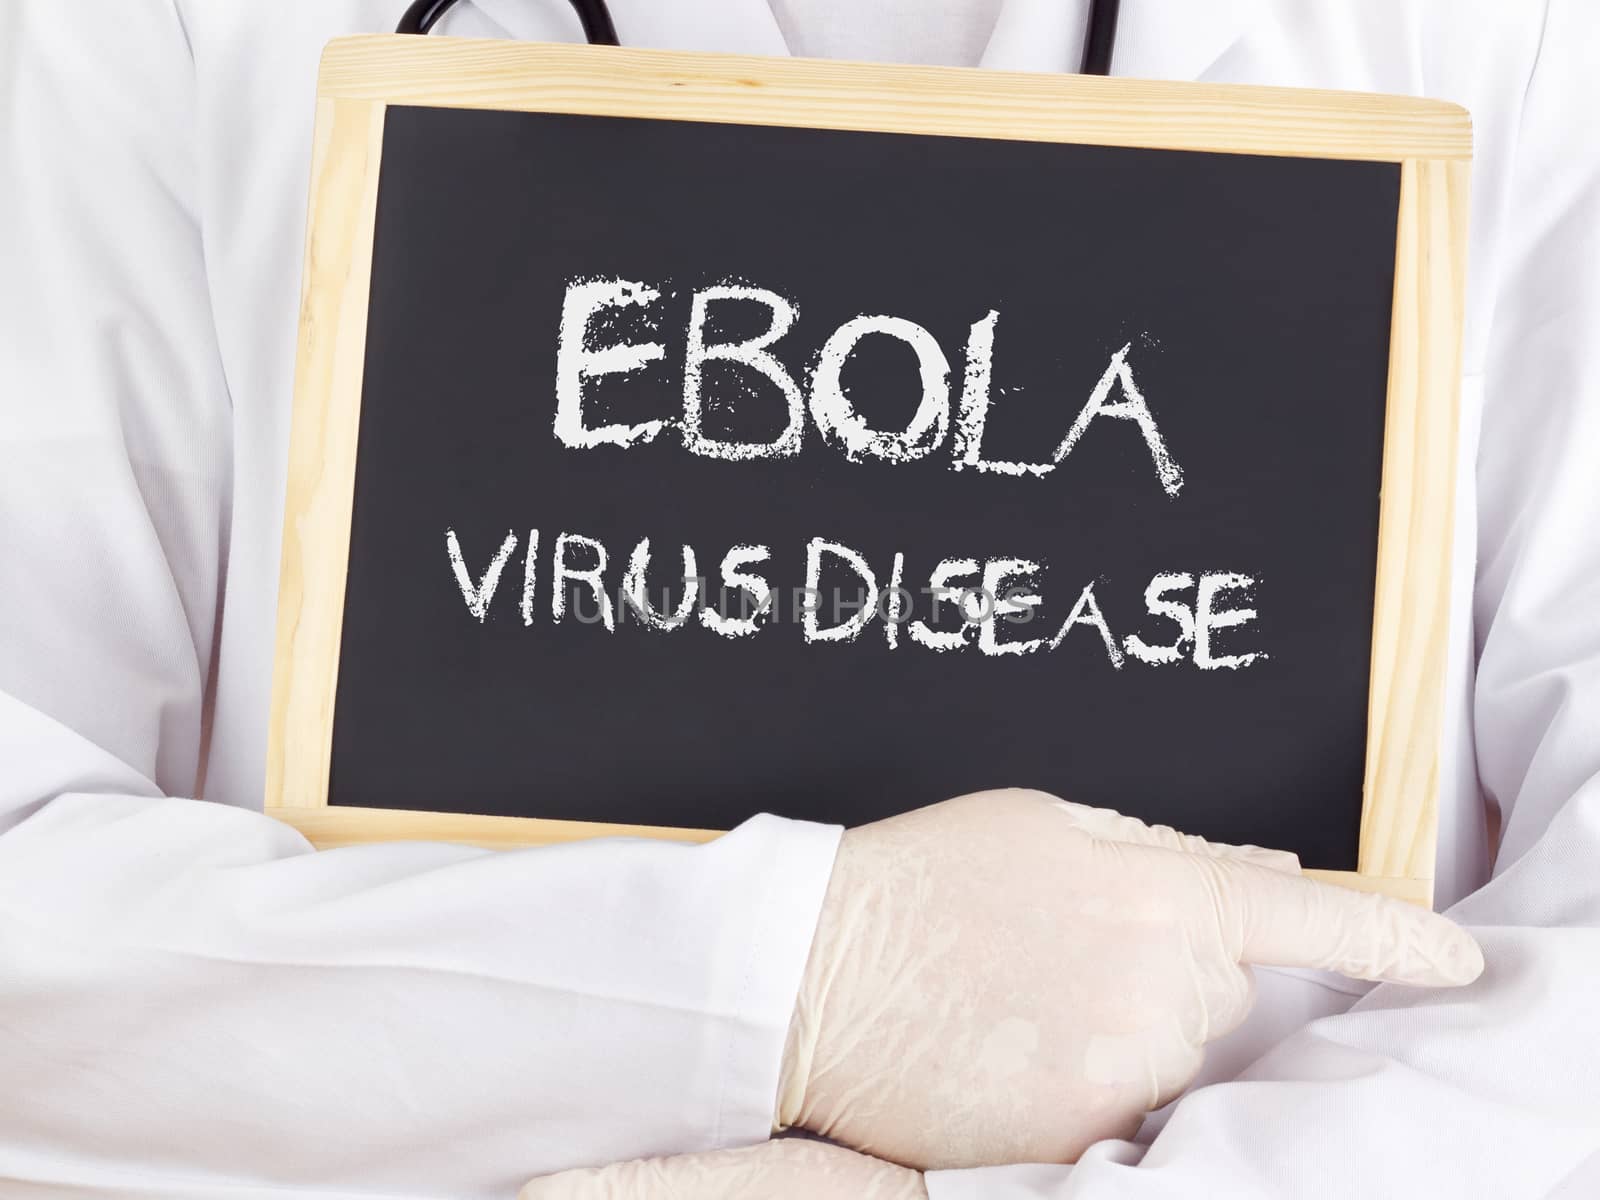 Doctor shows information: Ebola virus disease